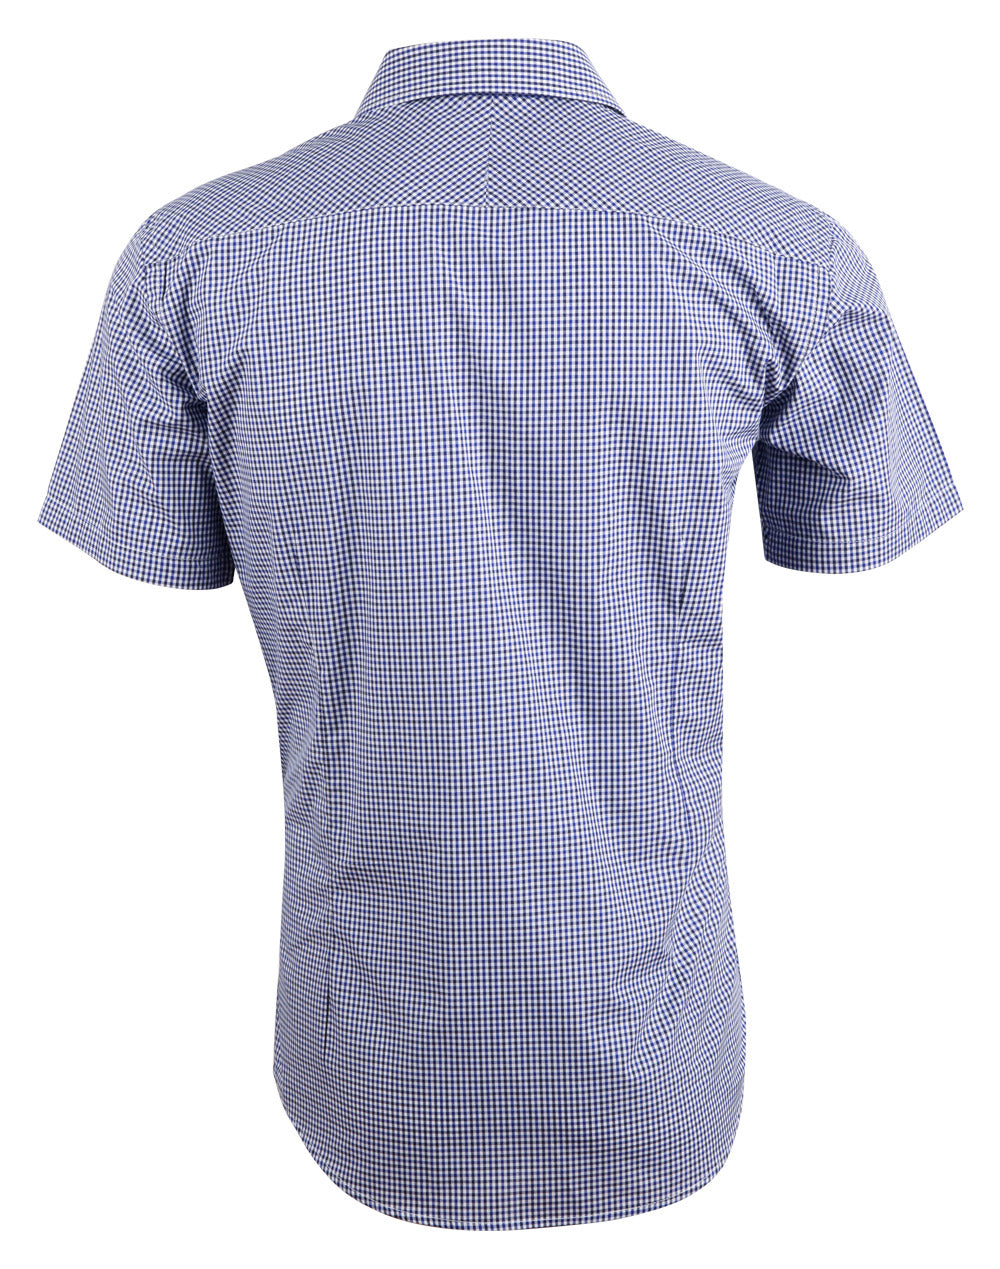 Benchmark M7320S Men’s Multi-Tone Check Short Sleeve Shirt